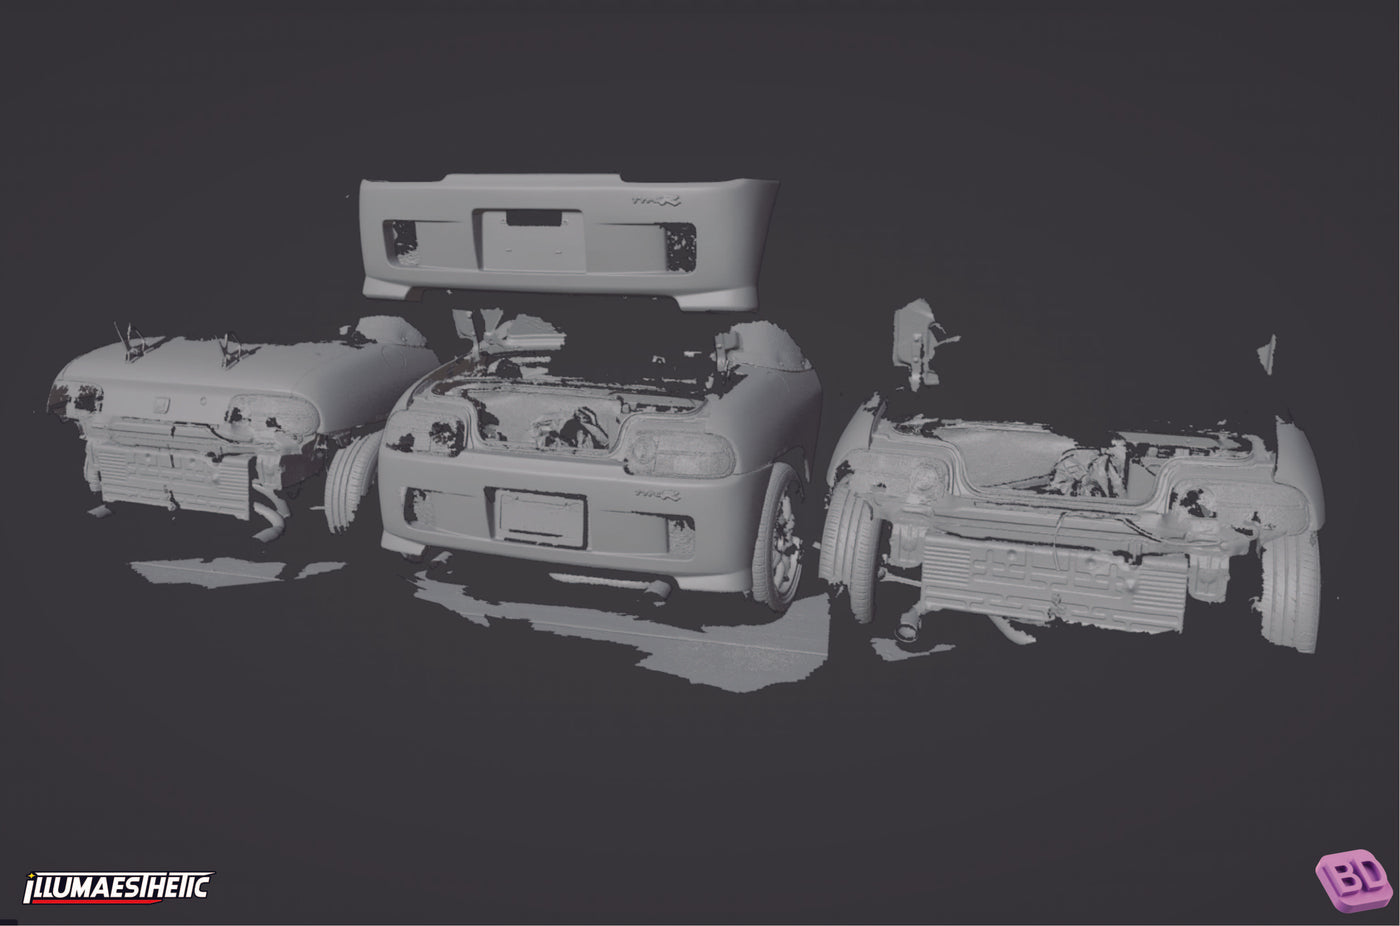 Honda Beat PP1 3D Scan Data (1991-1996)